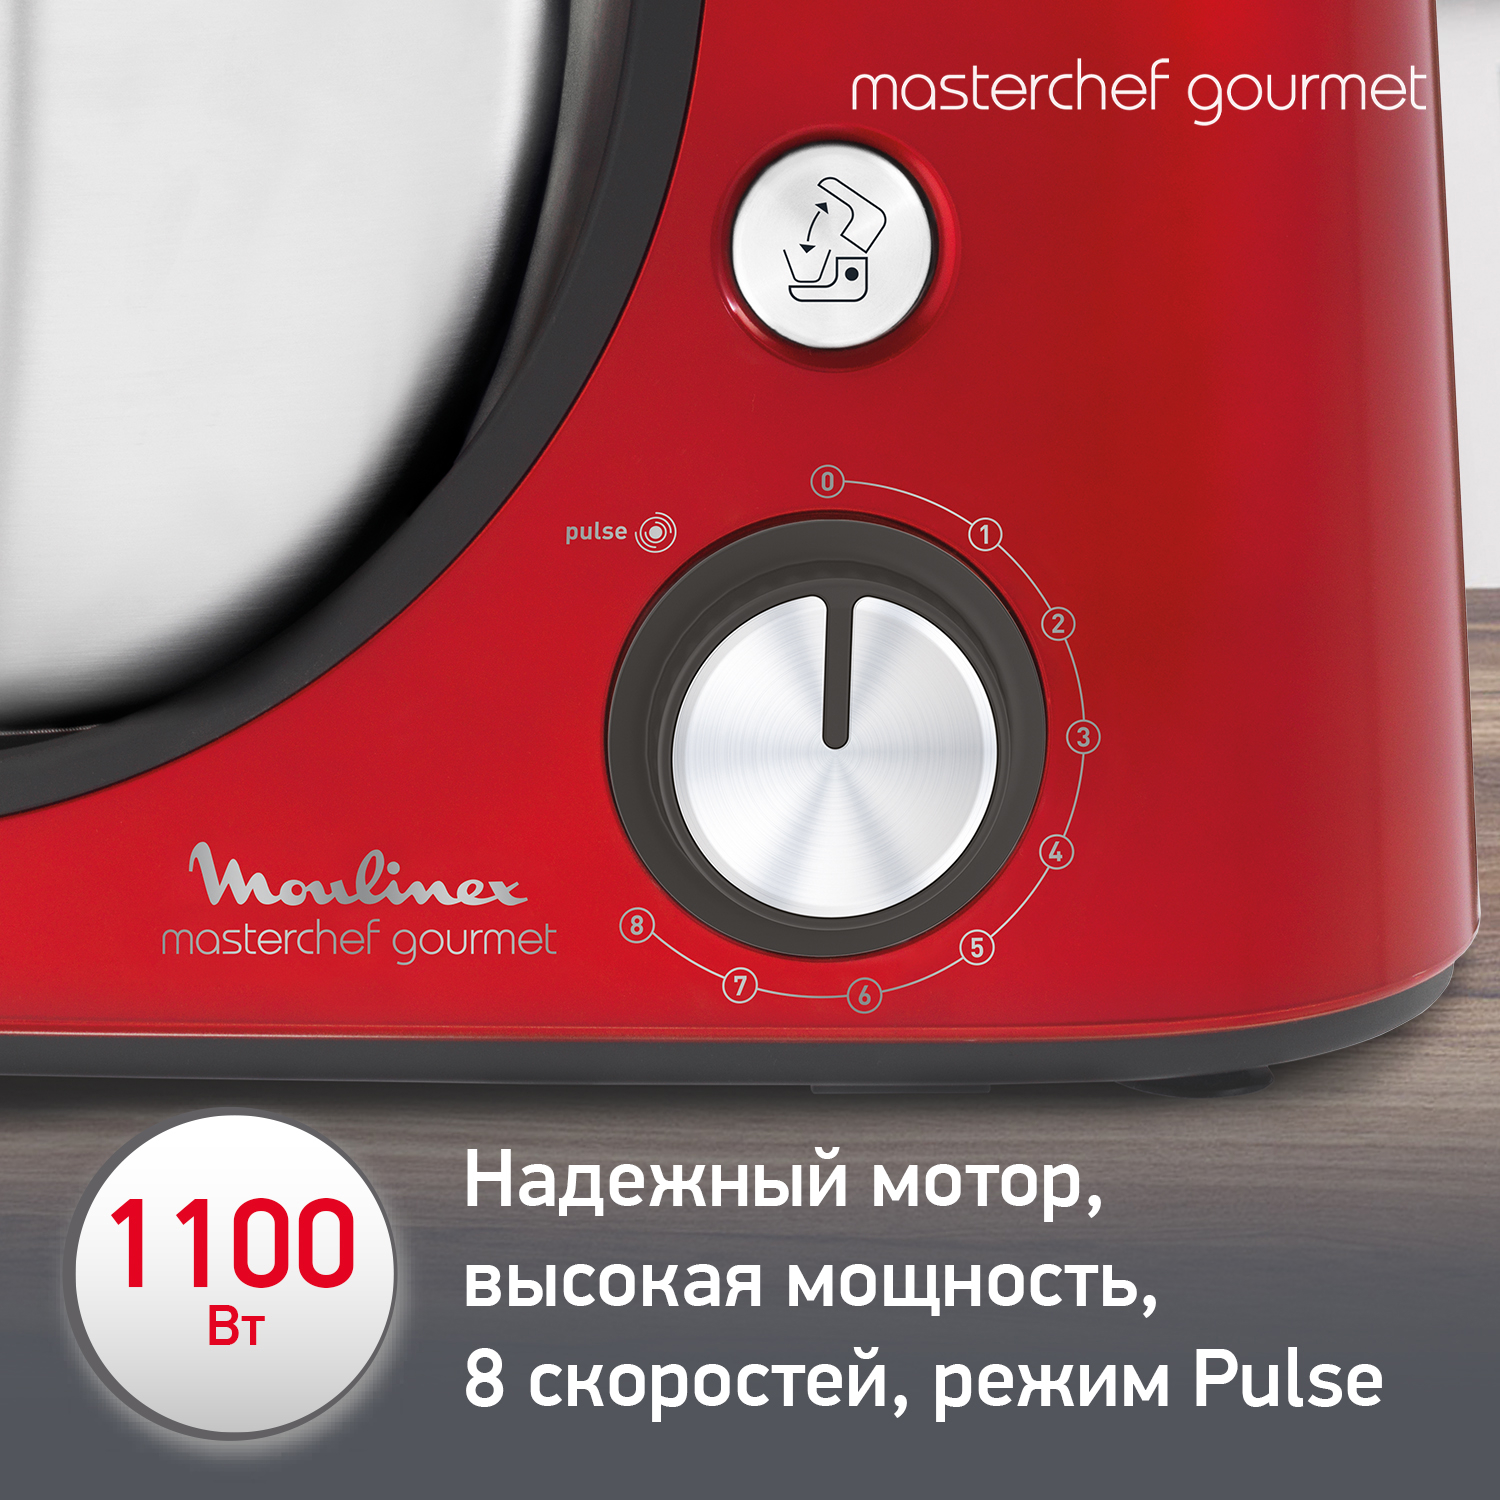 Кухонная машина Moulinex Masterchef Gourmet QA530G10